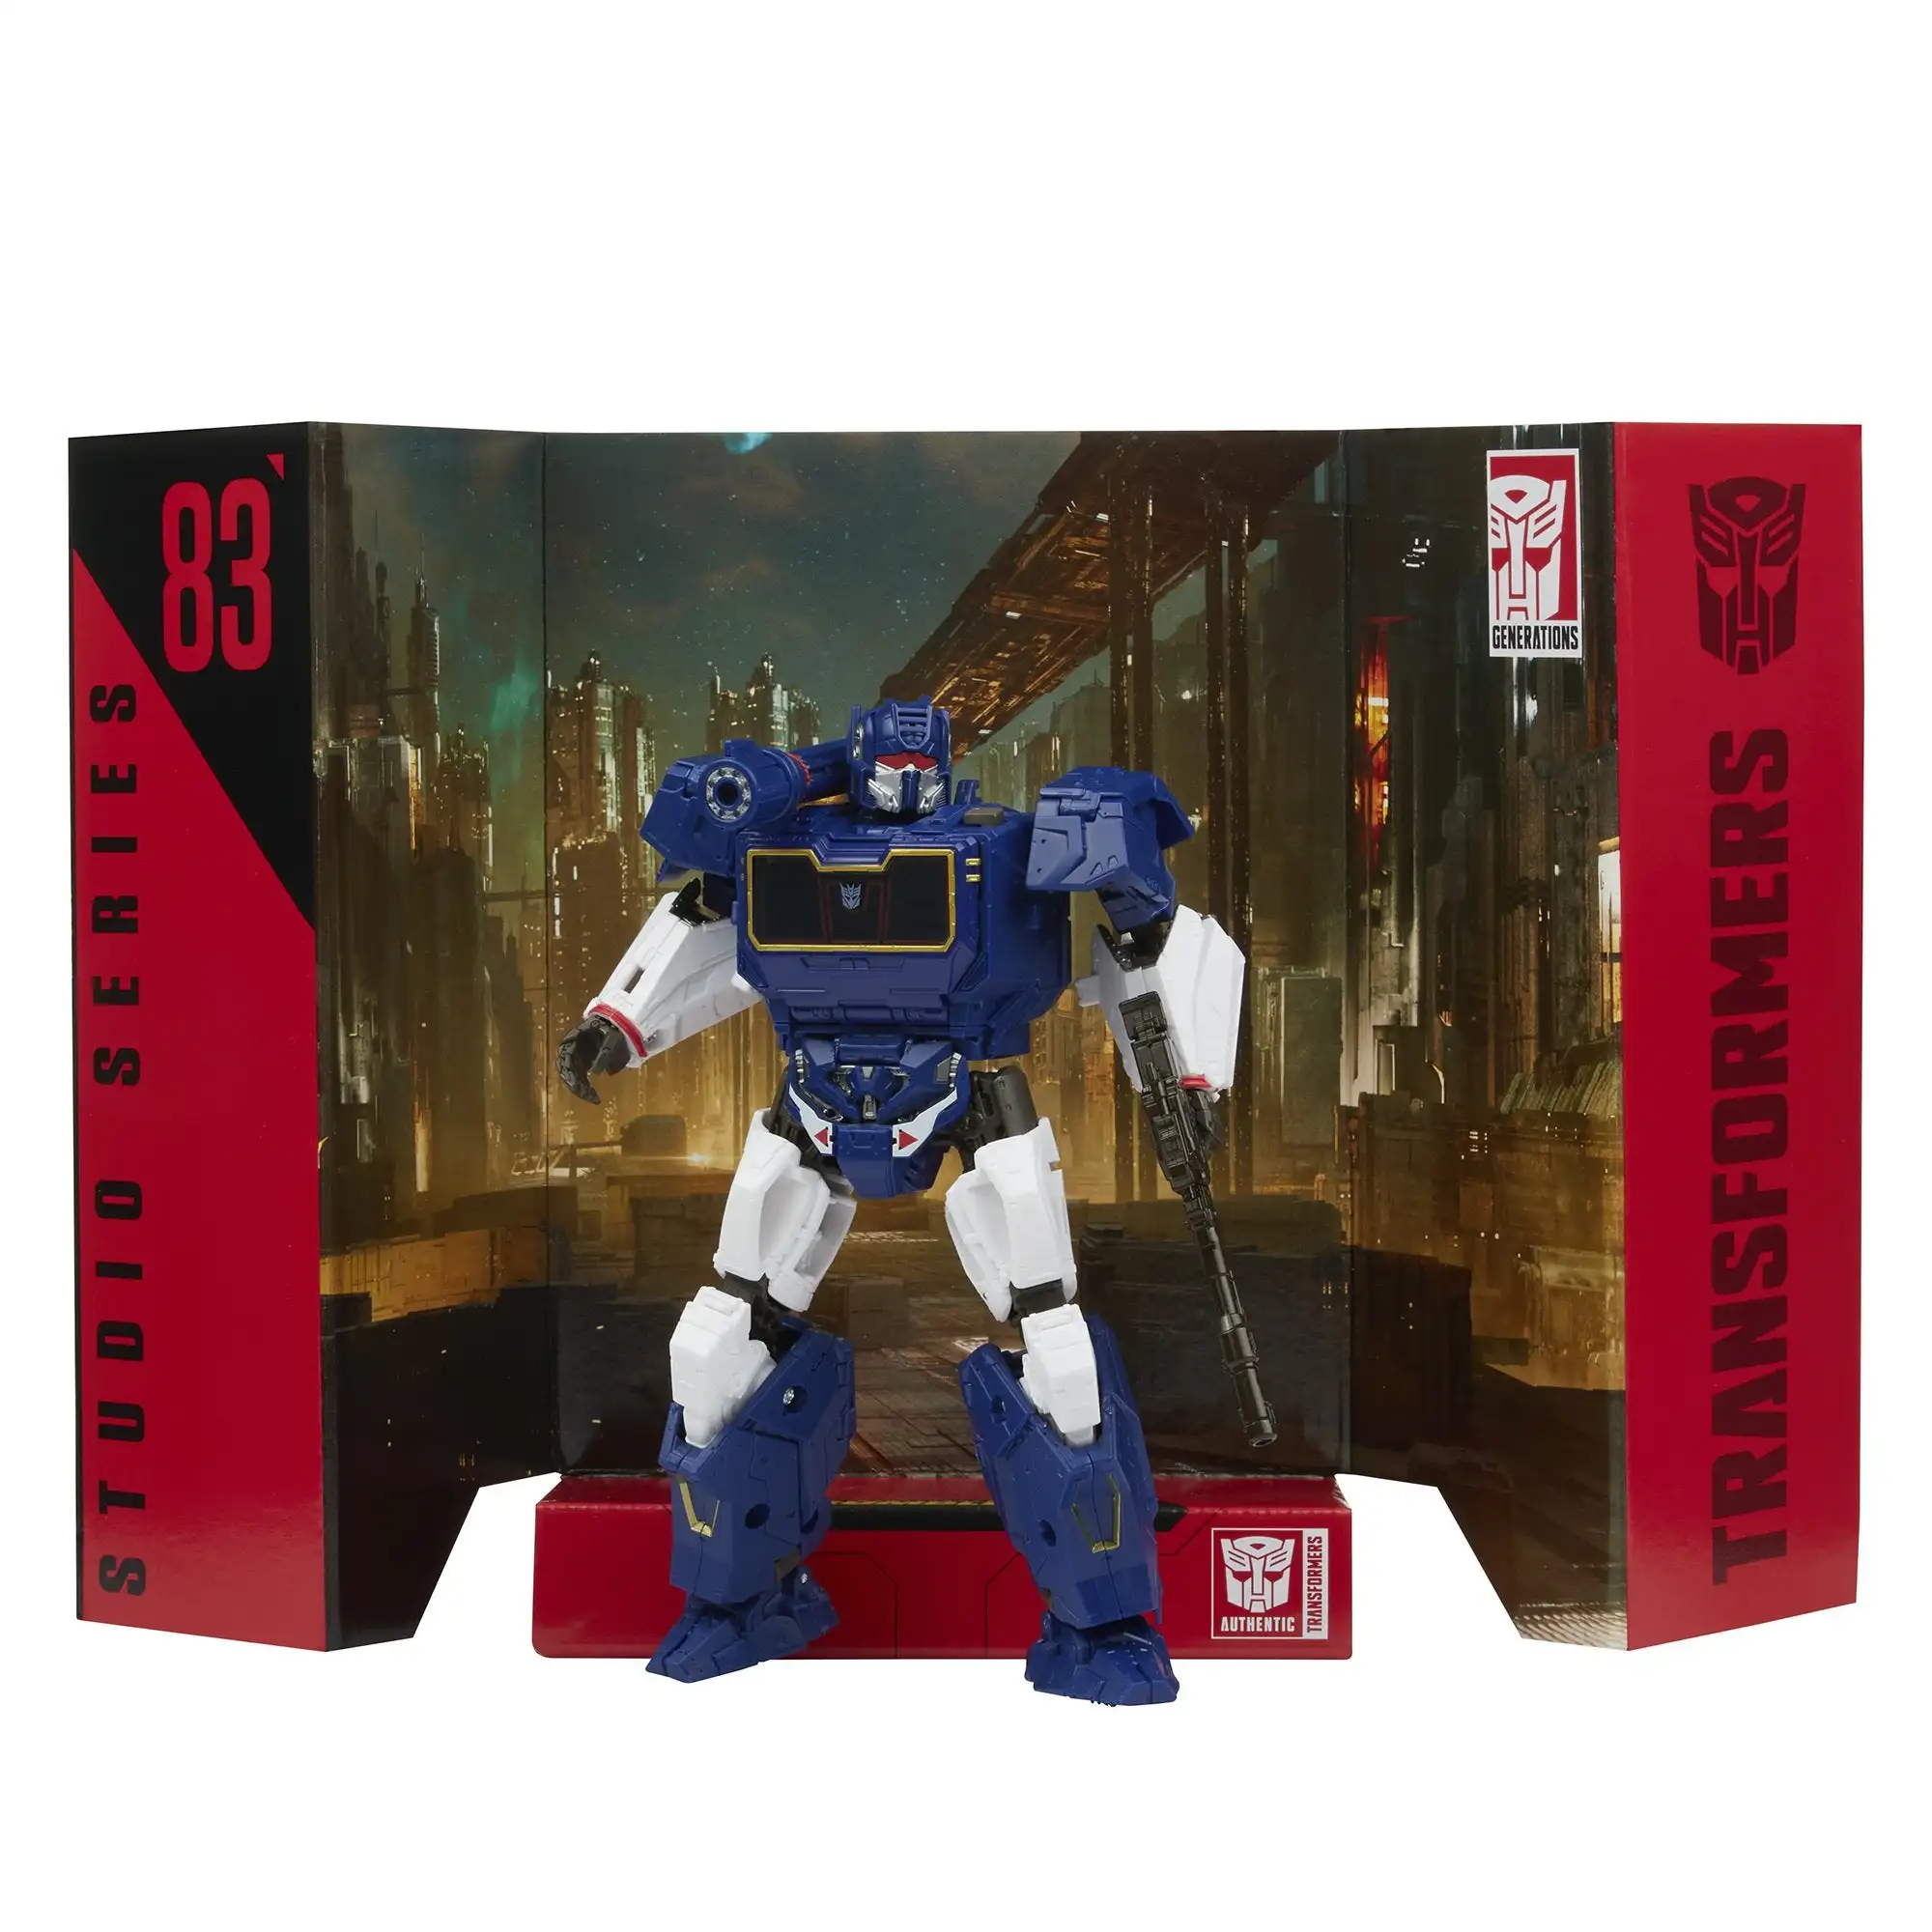 

Hasbro Transformers Studio Series 83 Voyager Soundwave Toys Gift F3173